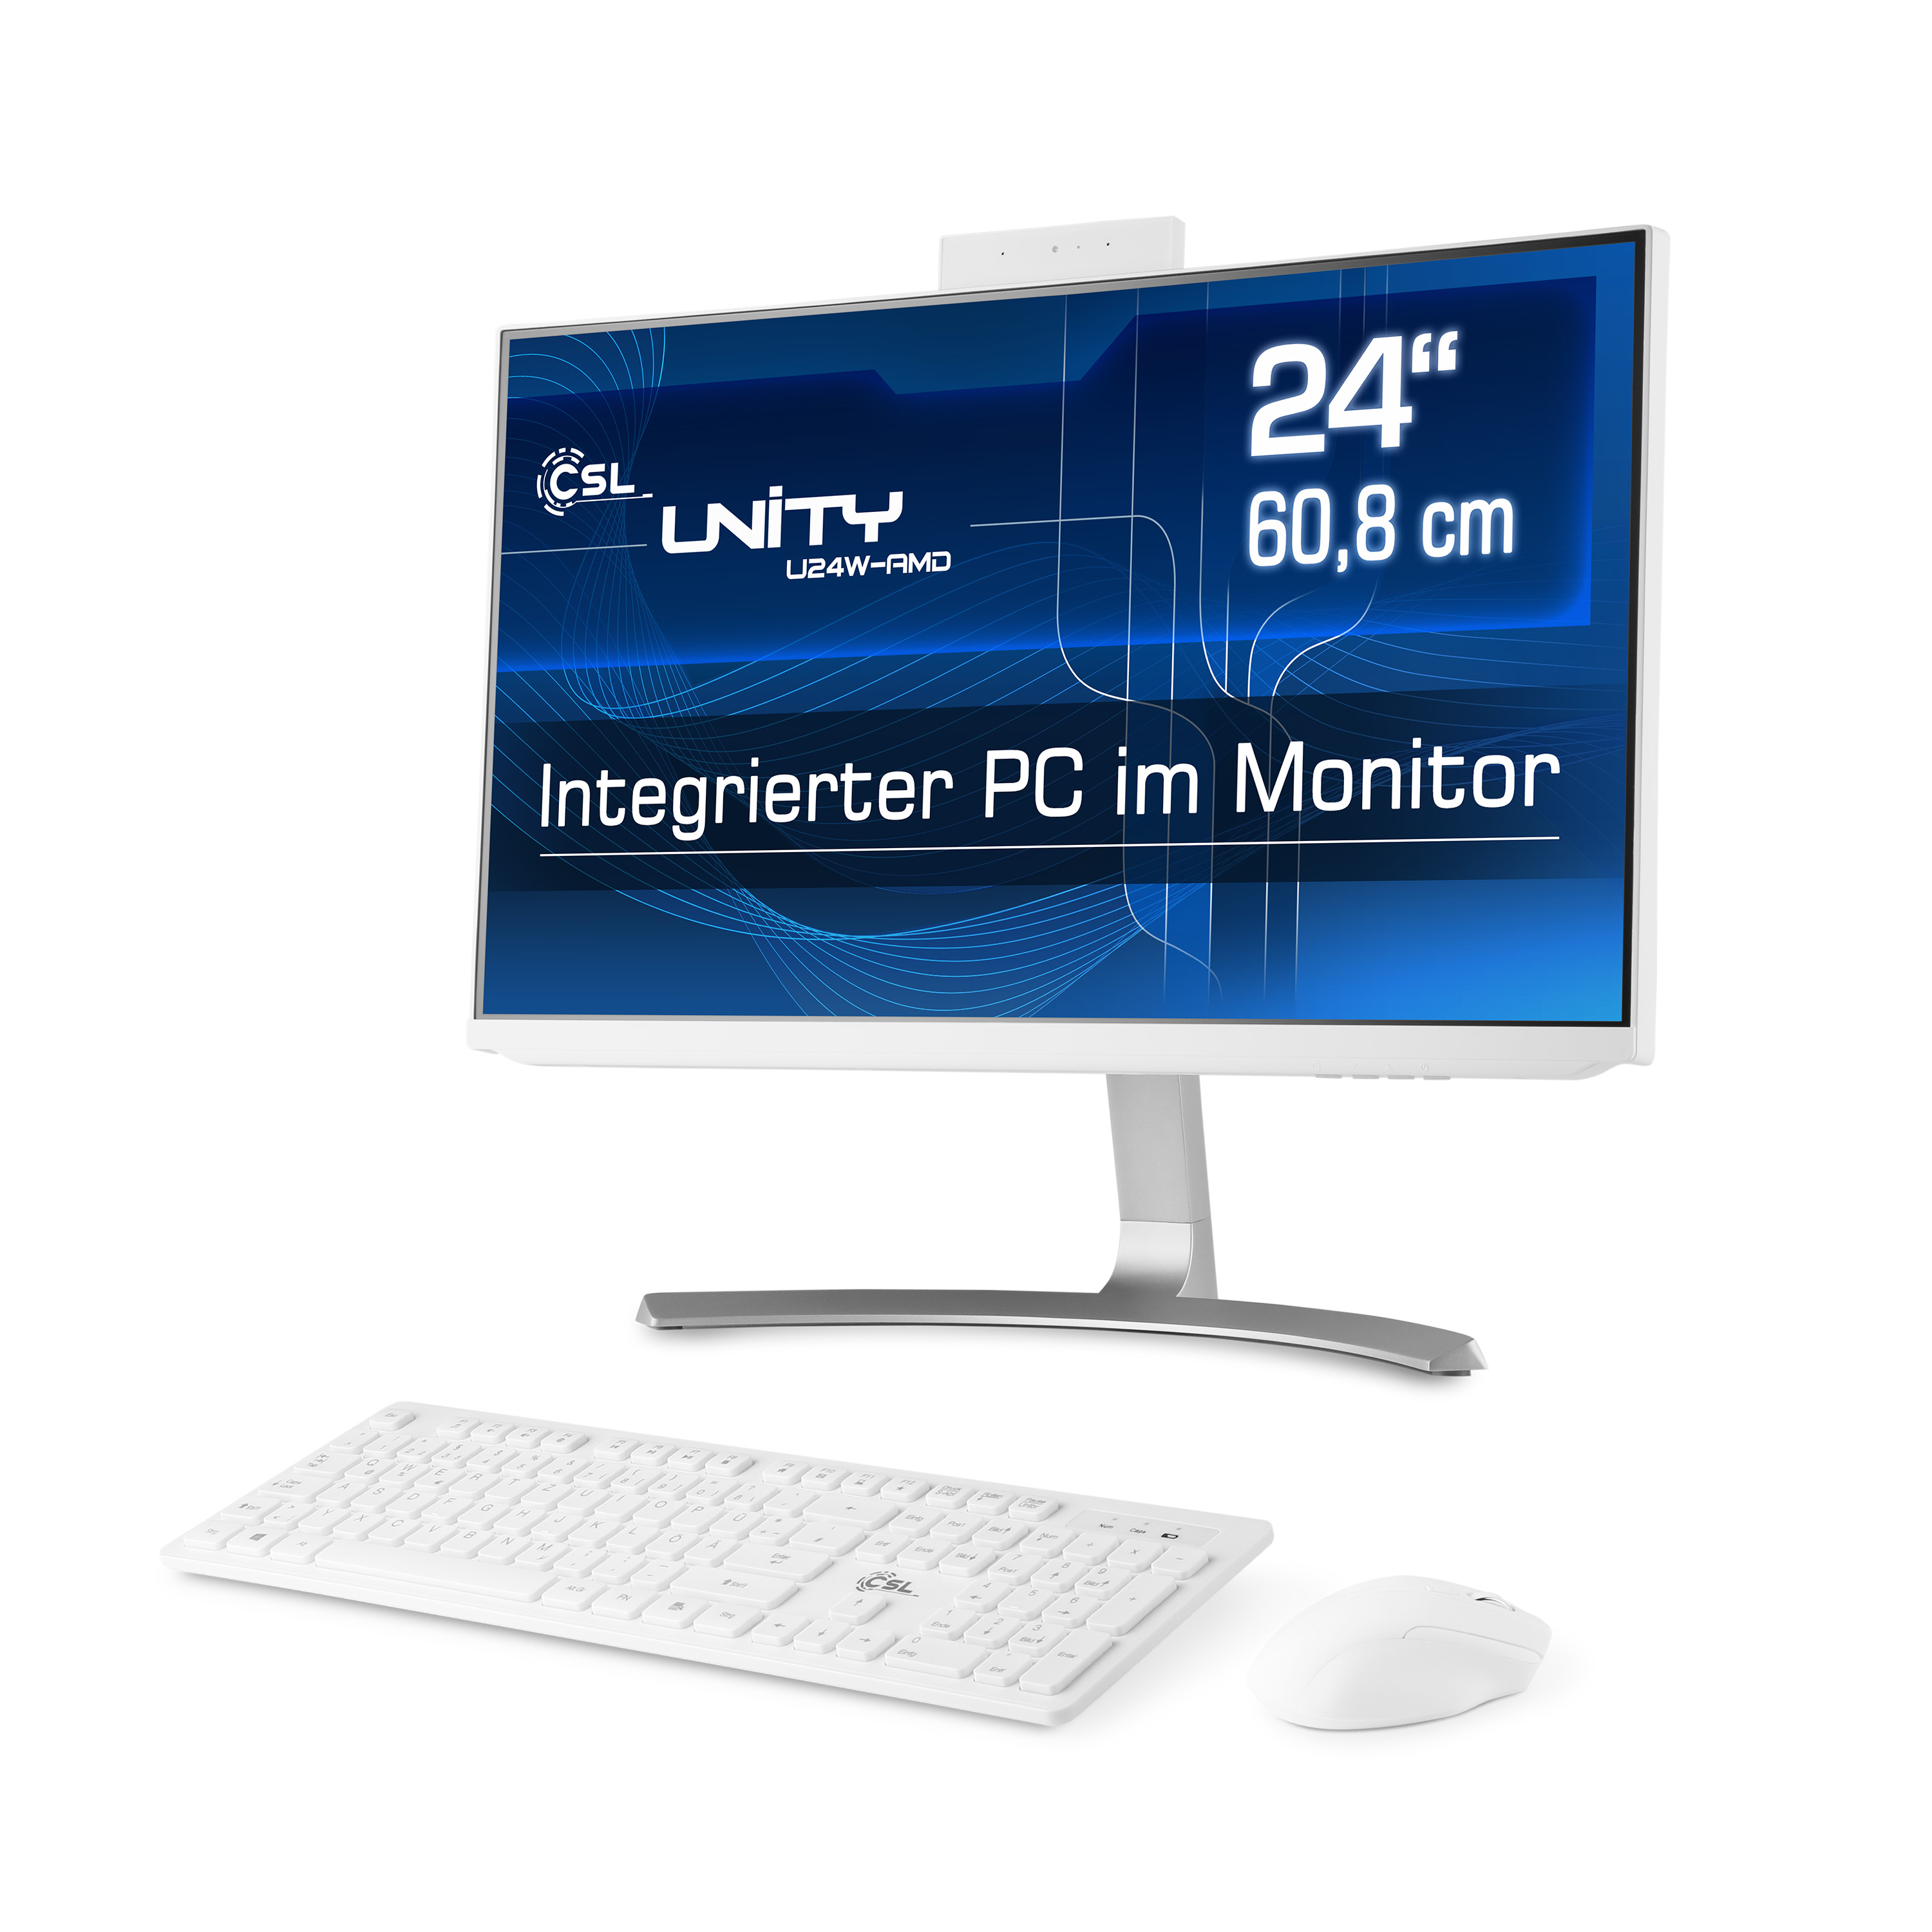 Display, All-in-One-PC 24 16 U24W-AMD GB CSL Zoll GB Radeon 16 GB weiß Graphics, SSD, AMD 4650G RAM, GB Unity RAM, / mit / / 1000 1000